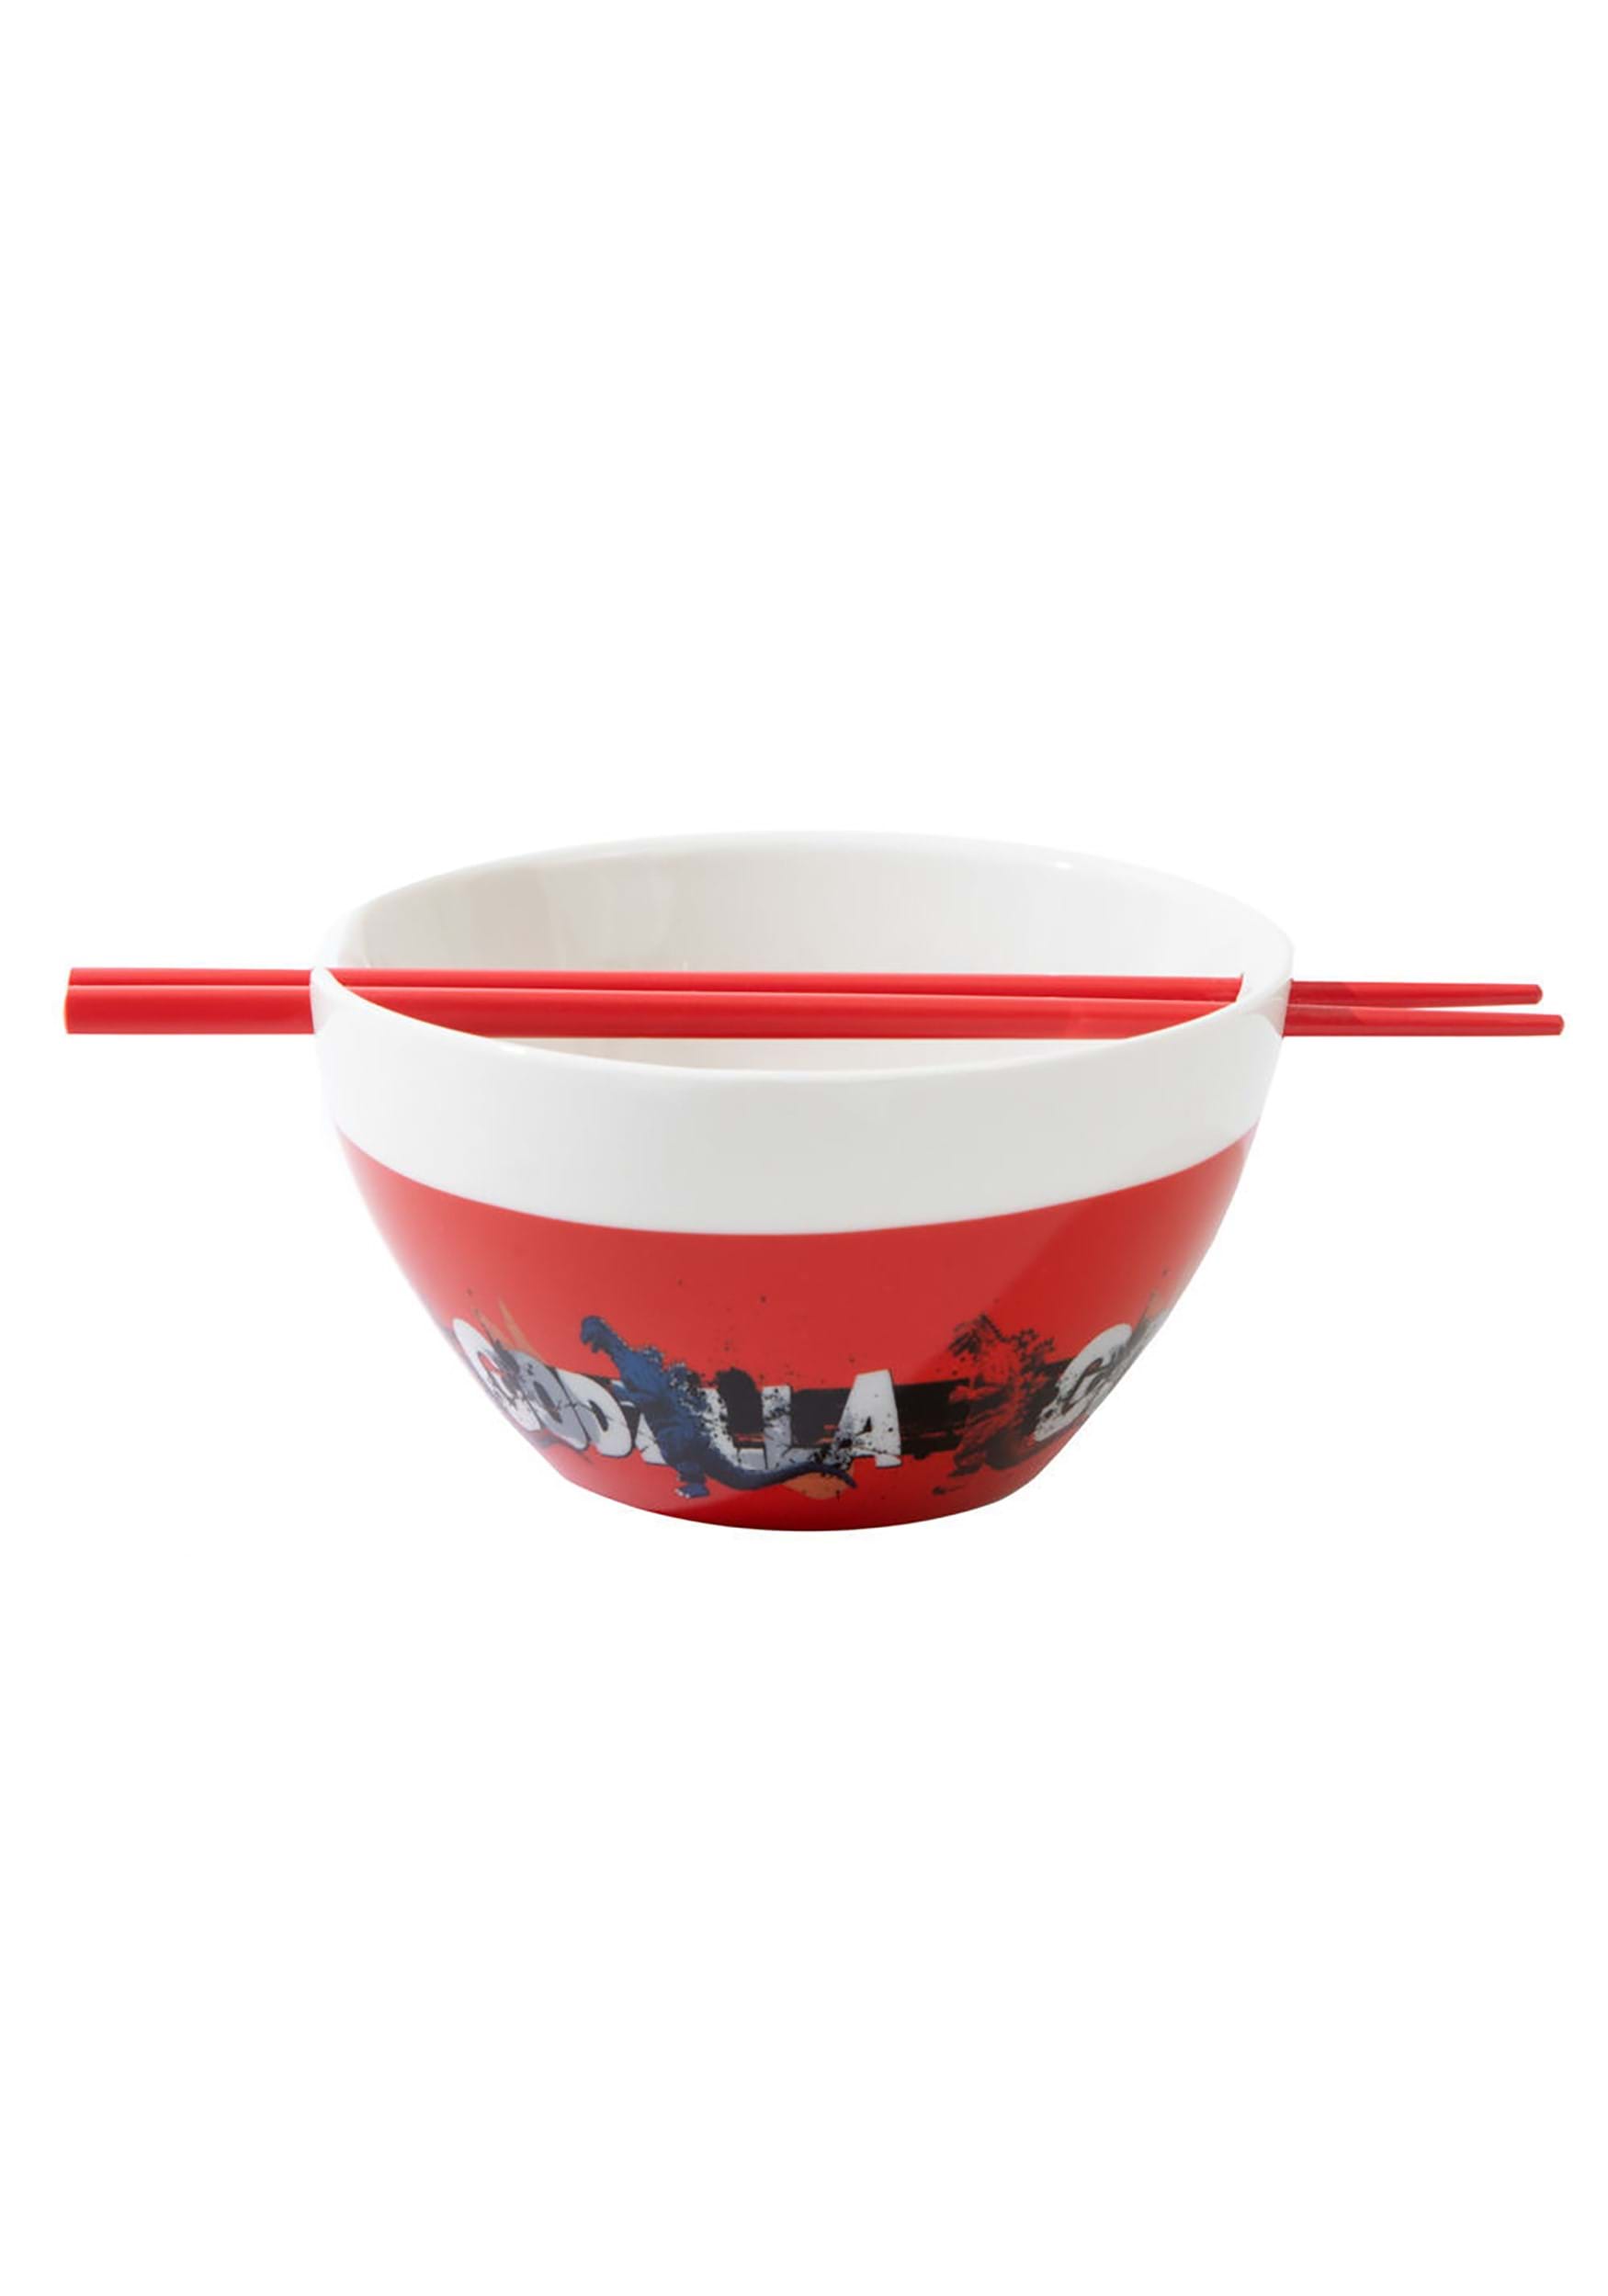 Ceramic Bowl with Chopsticks and Godzilla